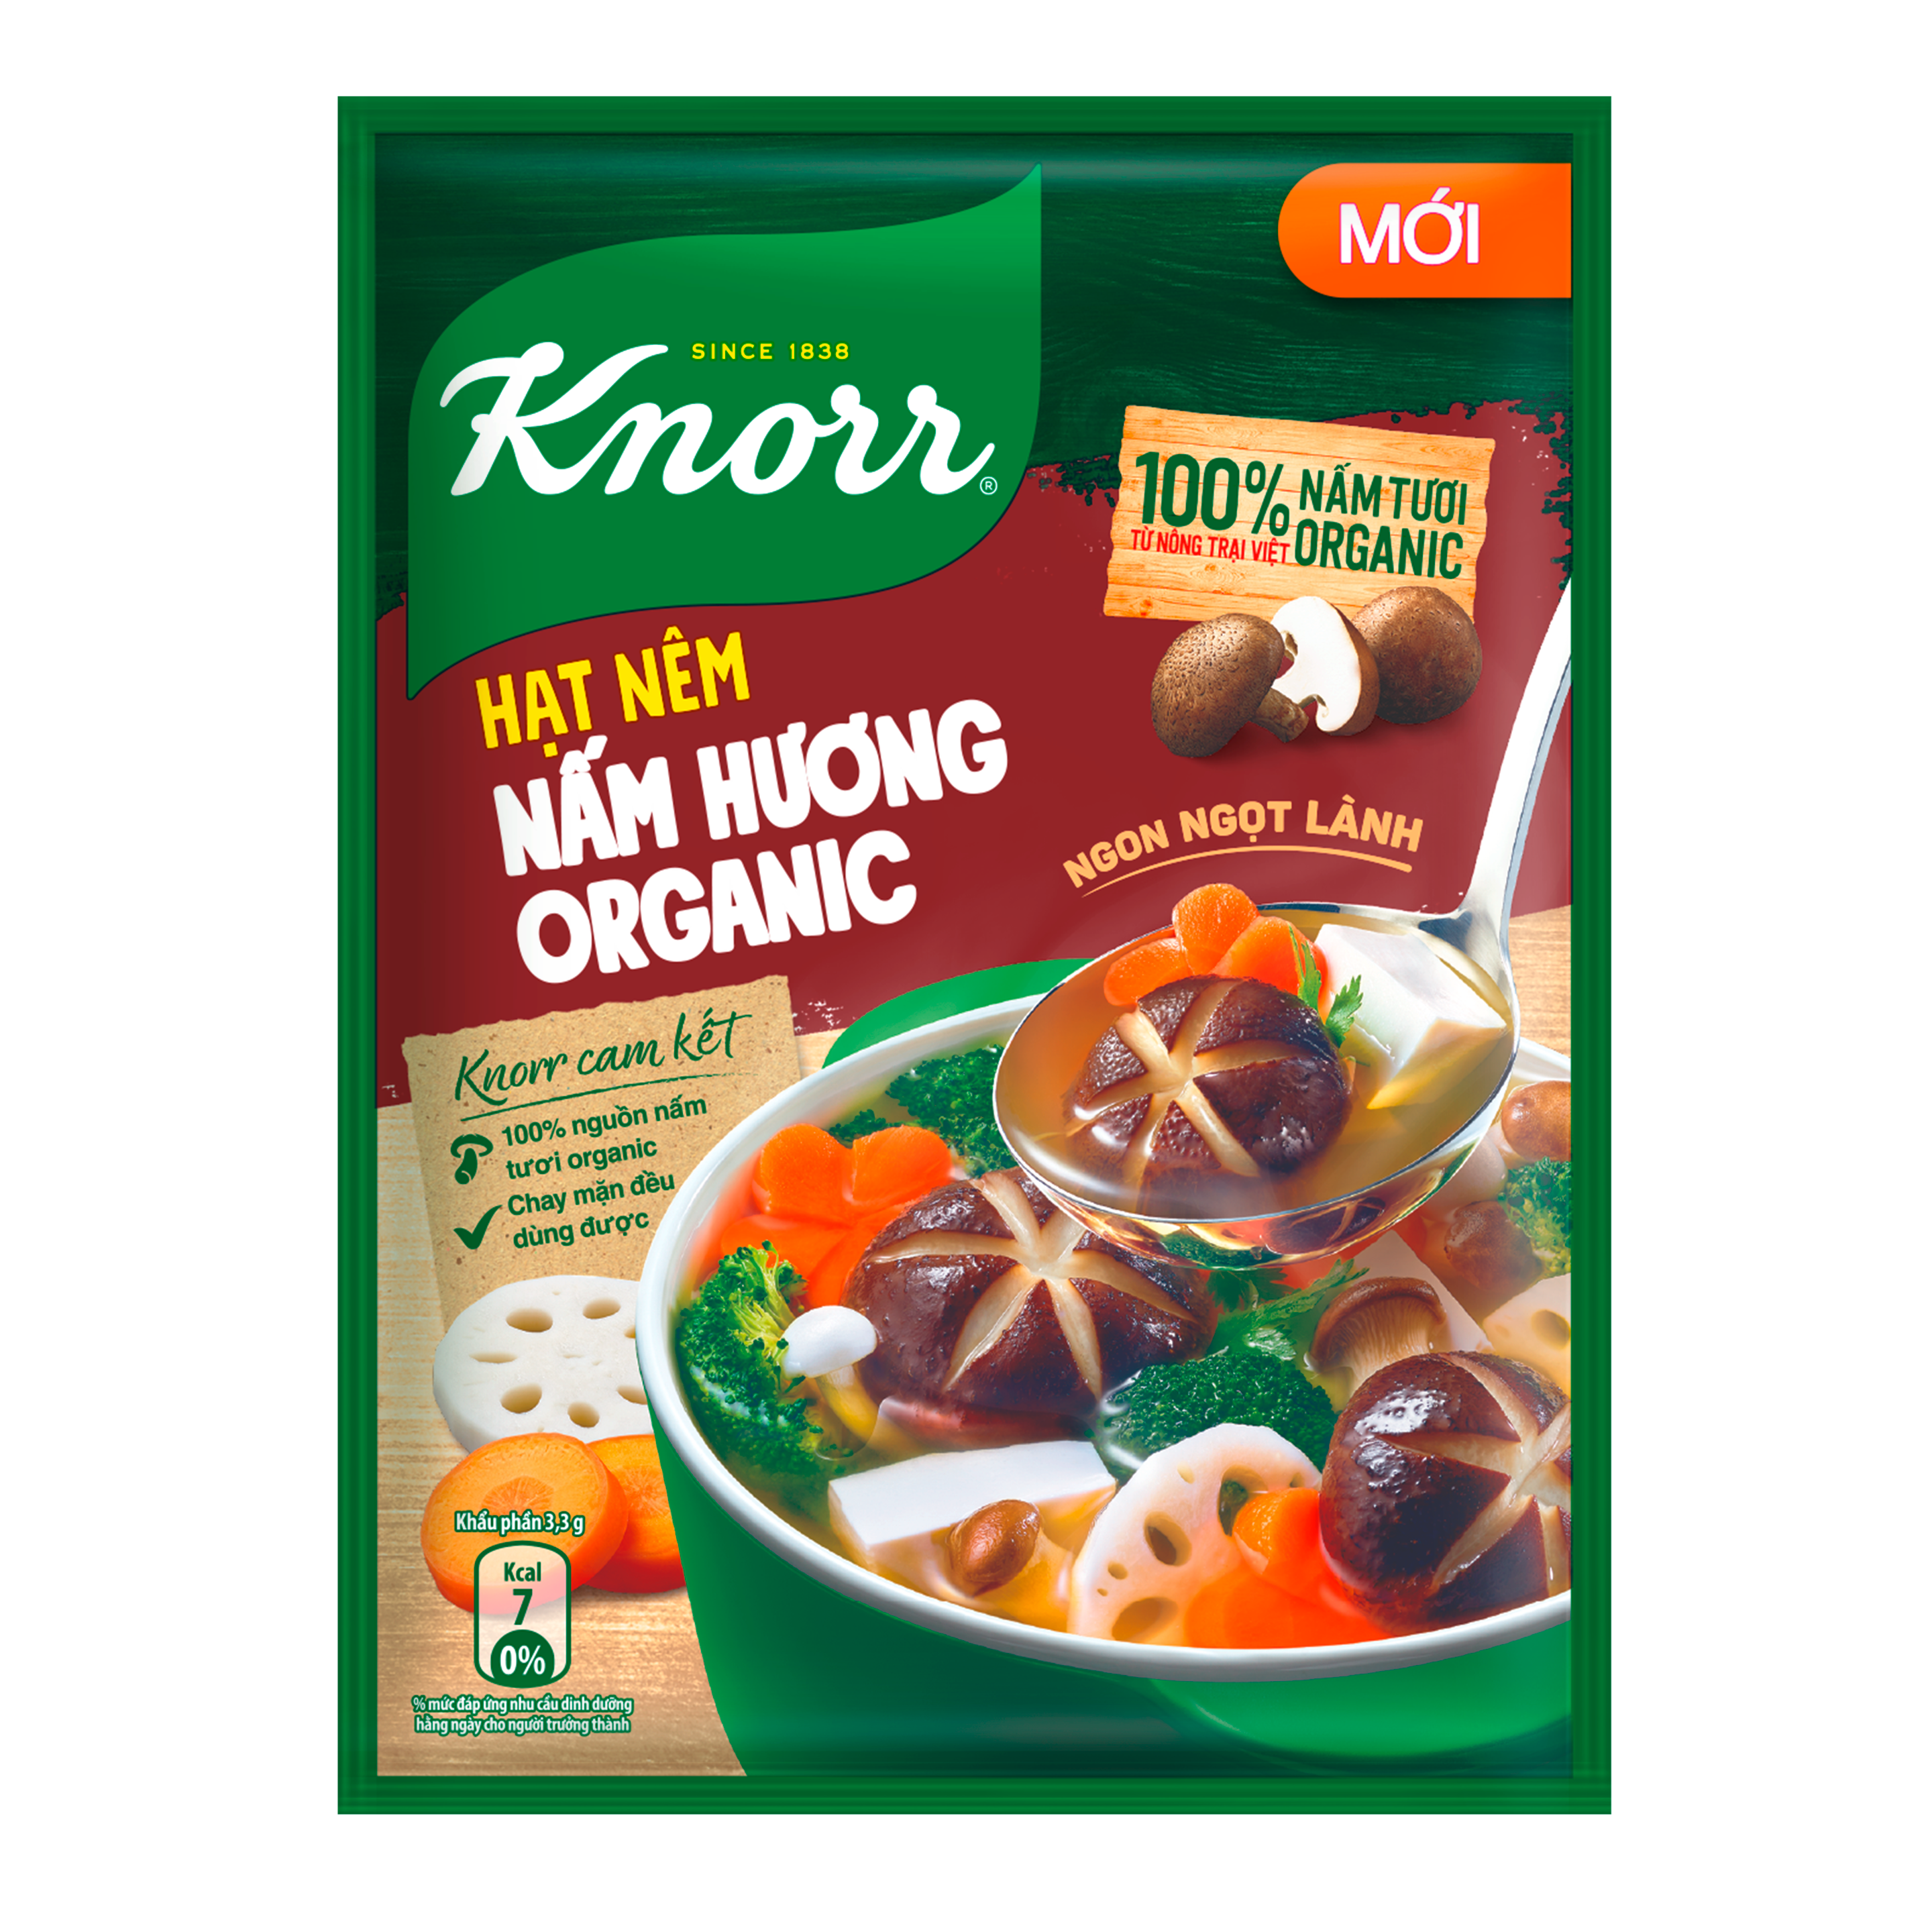 Hat nem Knorr nam huong organic 50g